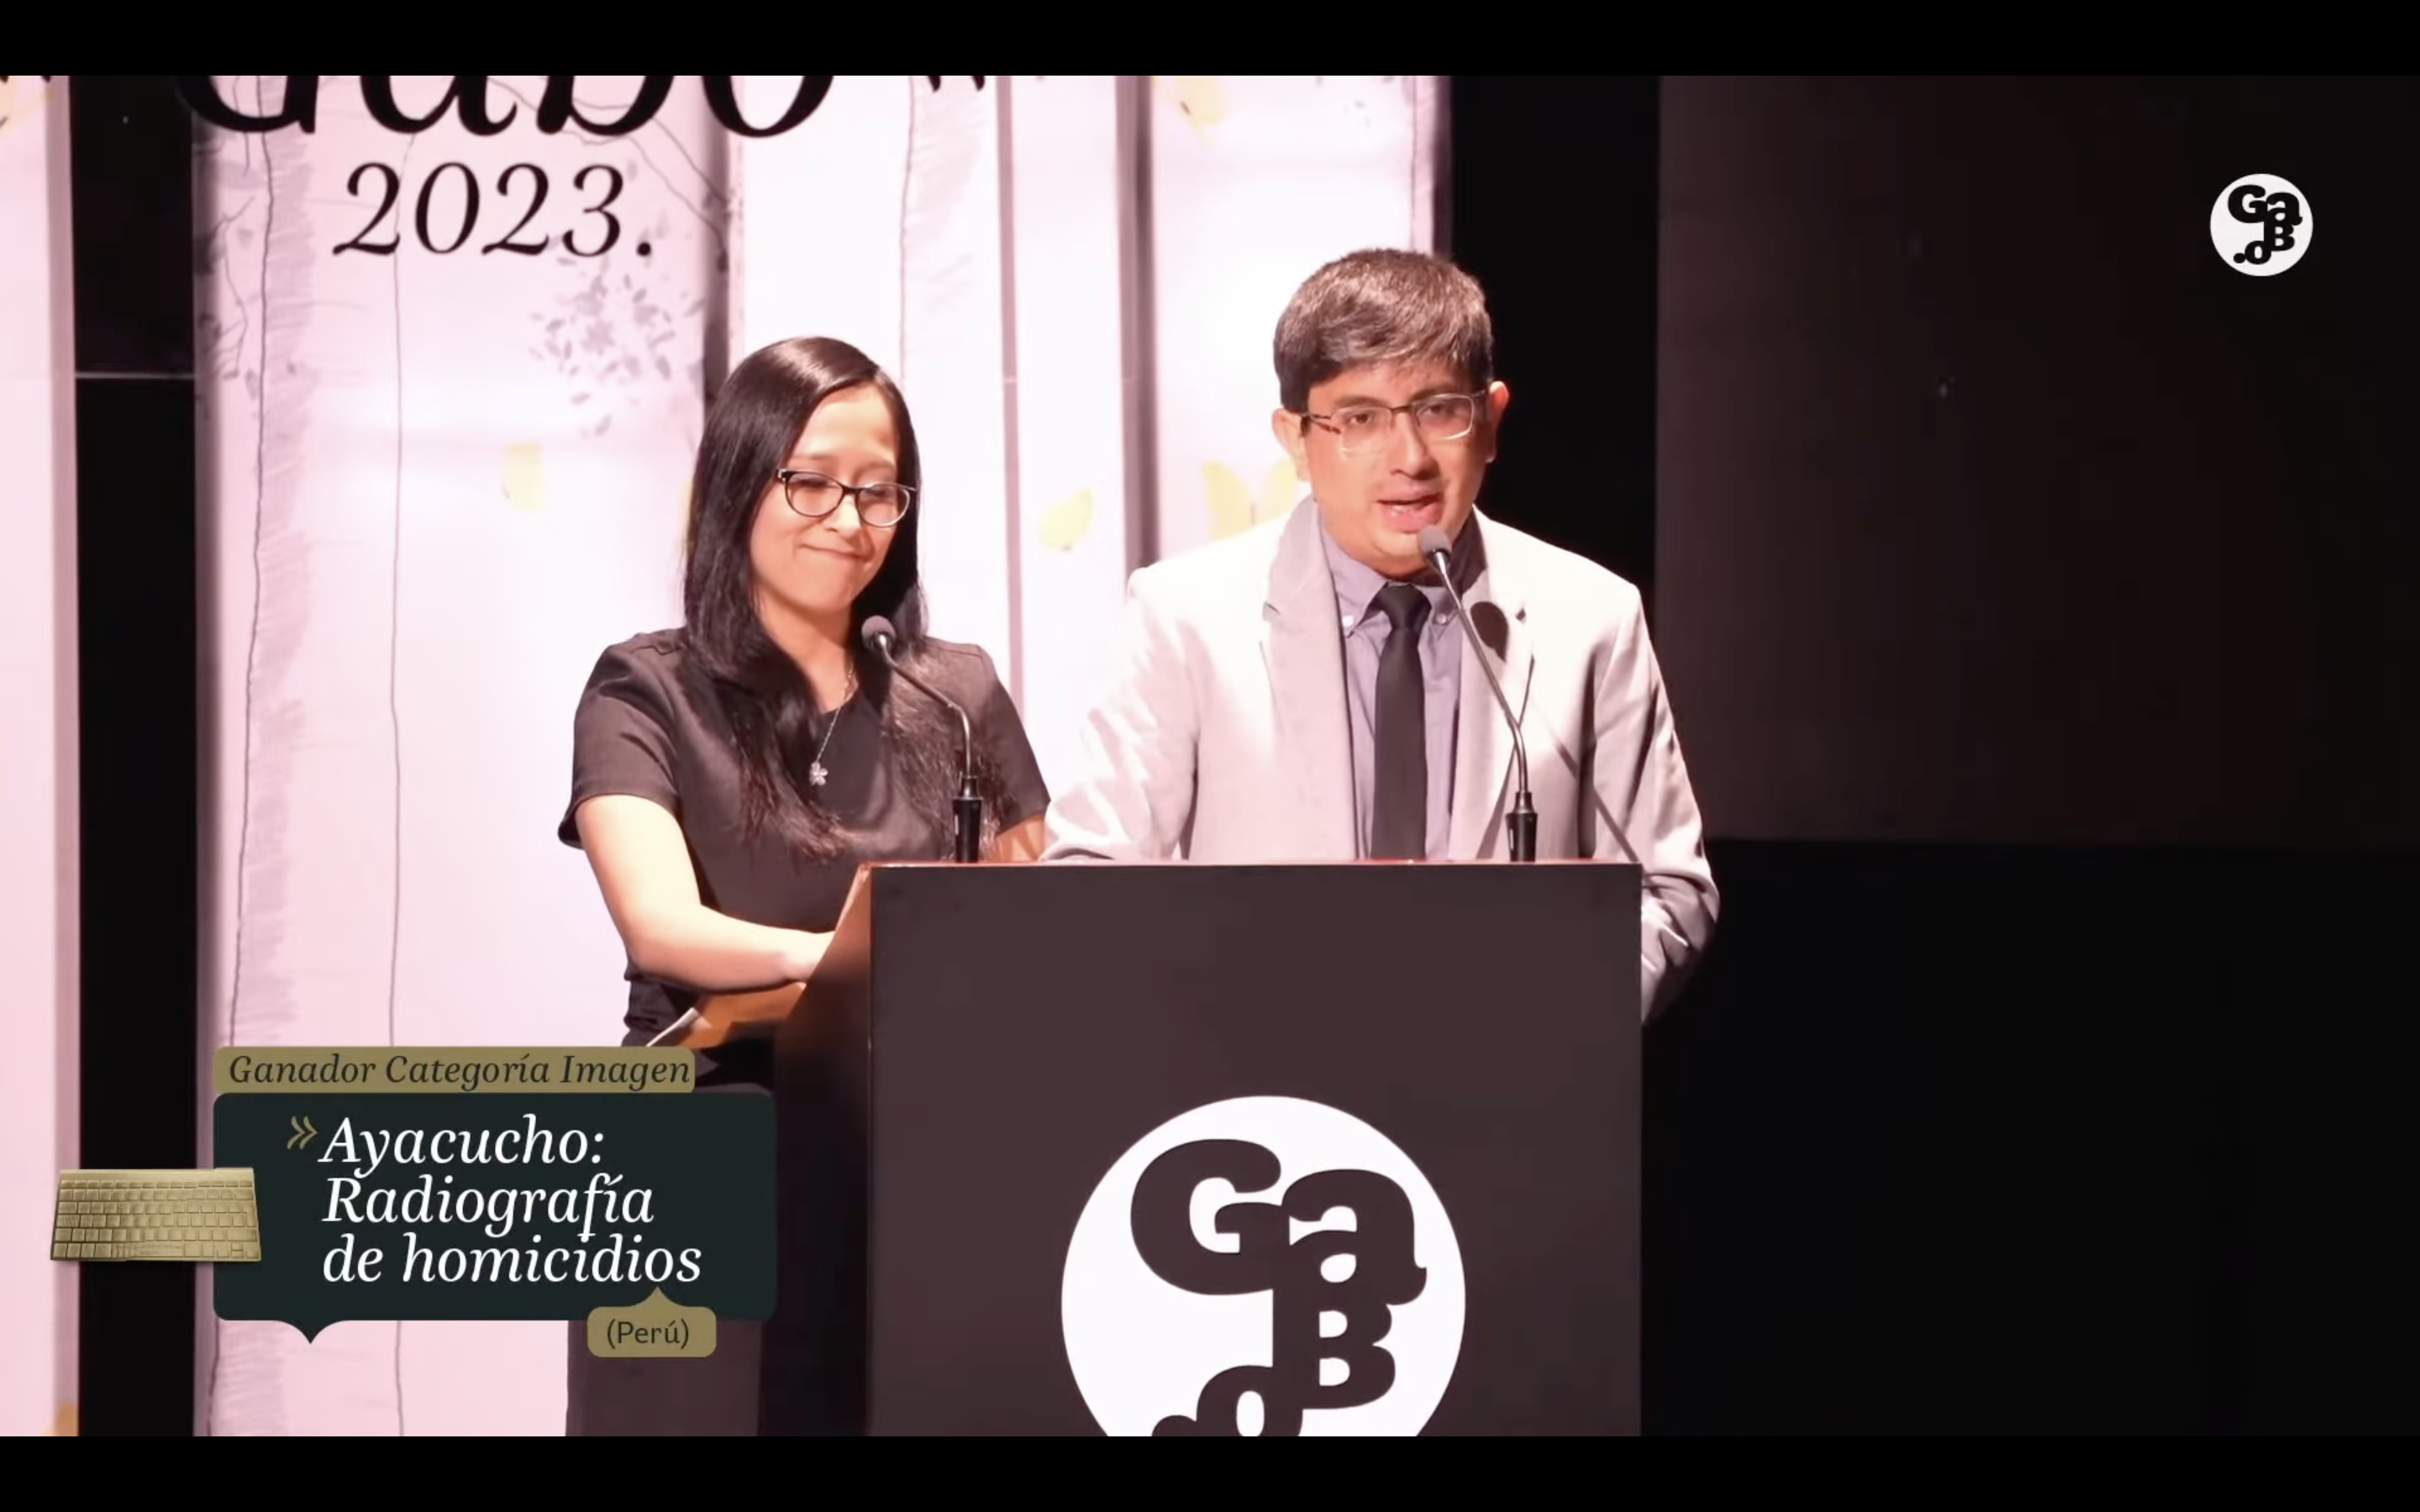 Peruvian journalists Rosa Laura and César Prado receiving the Gabo Award 2023 in Bogotá, Colombia.